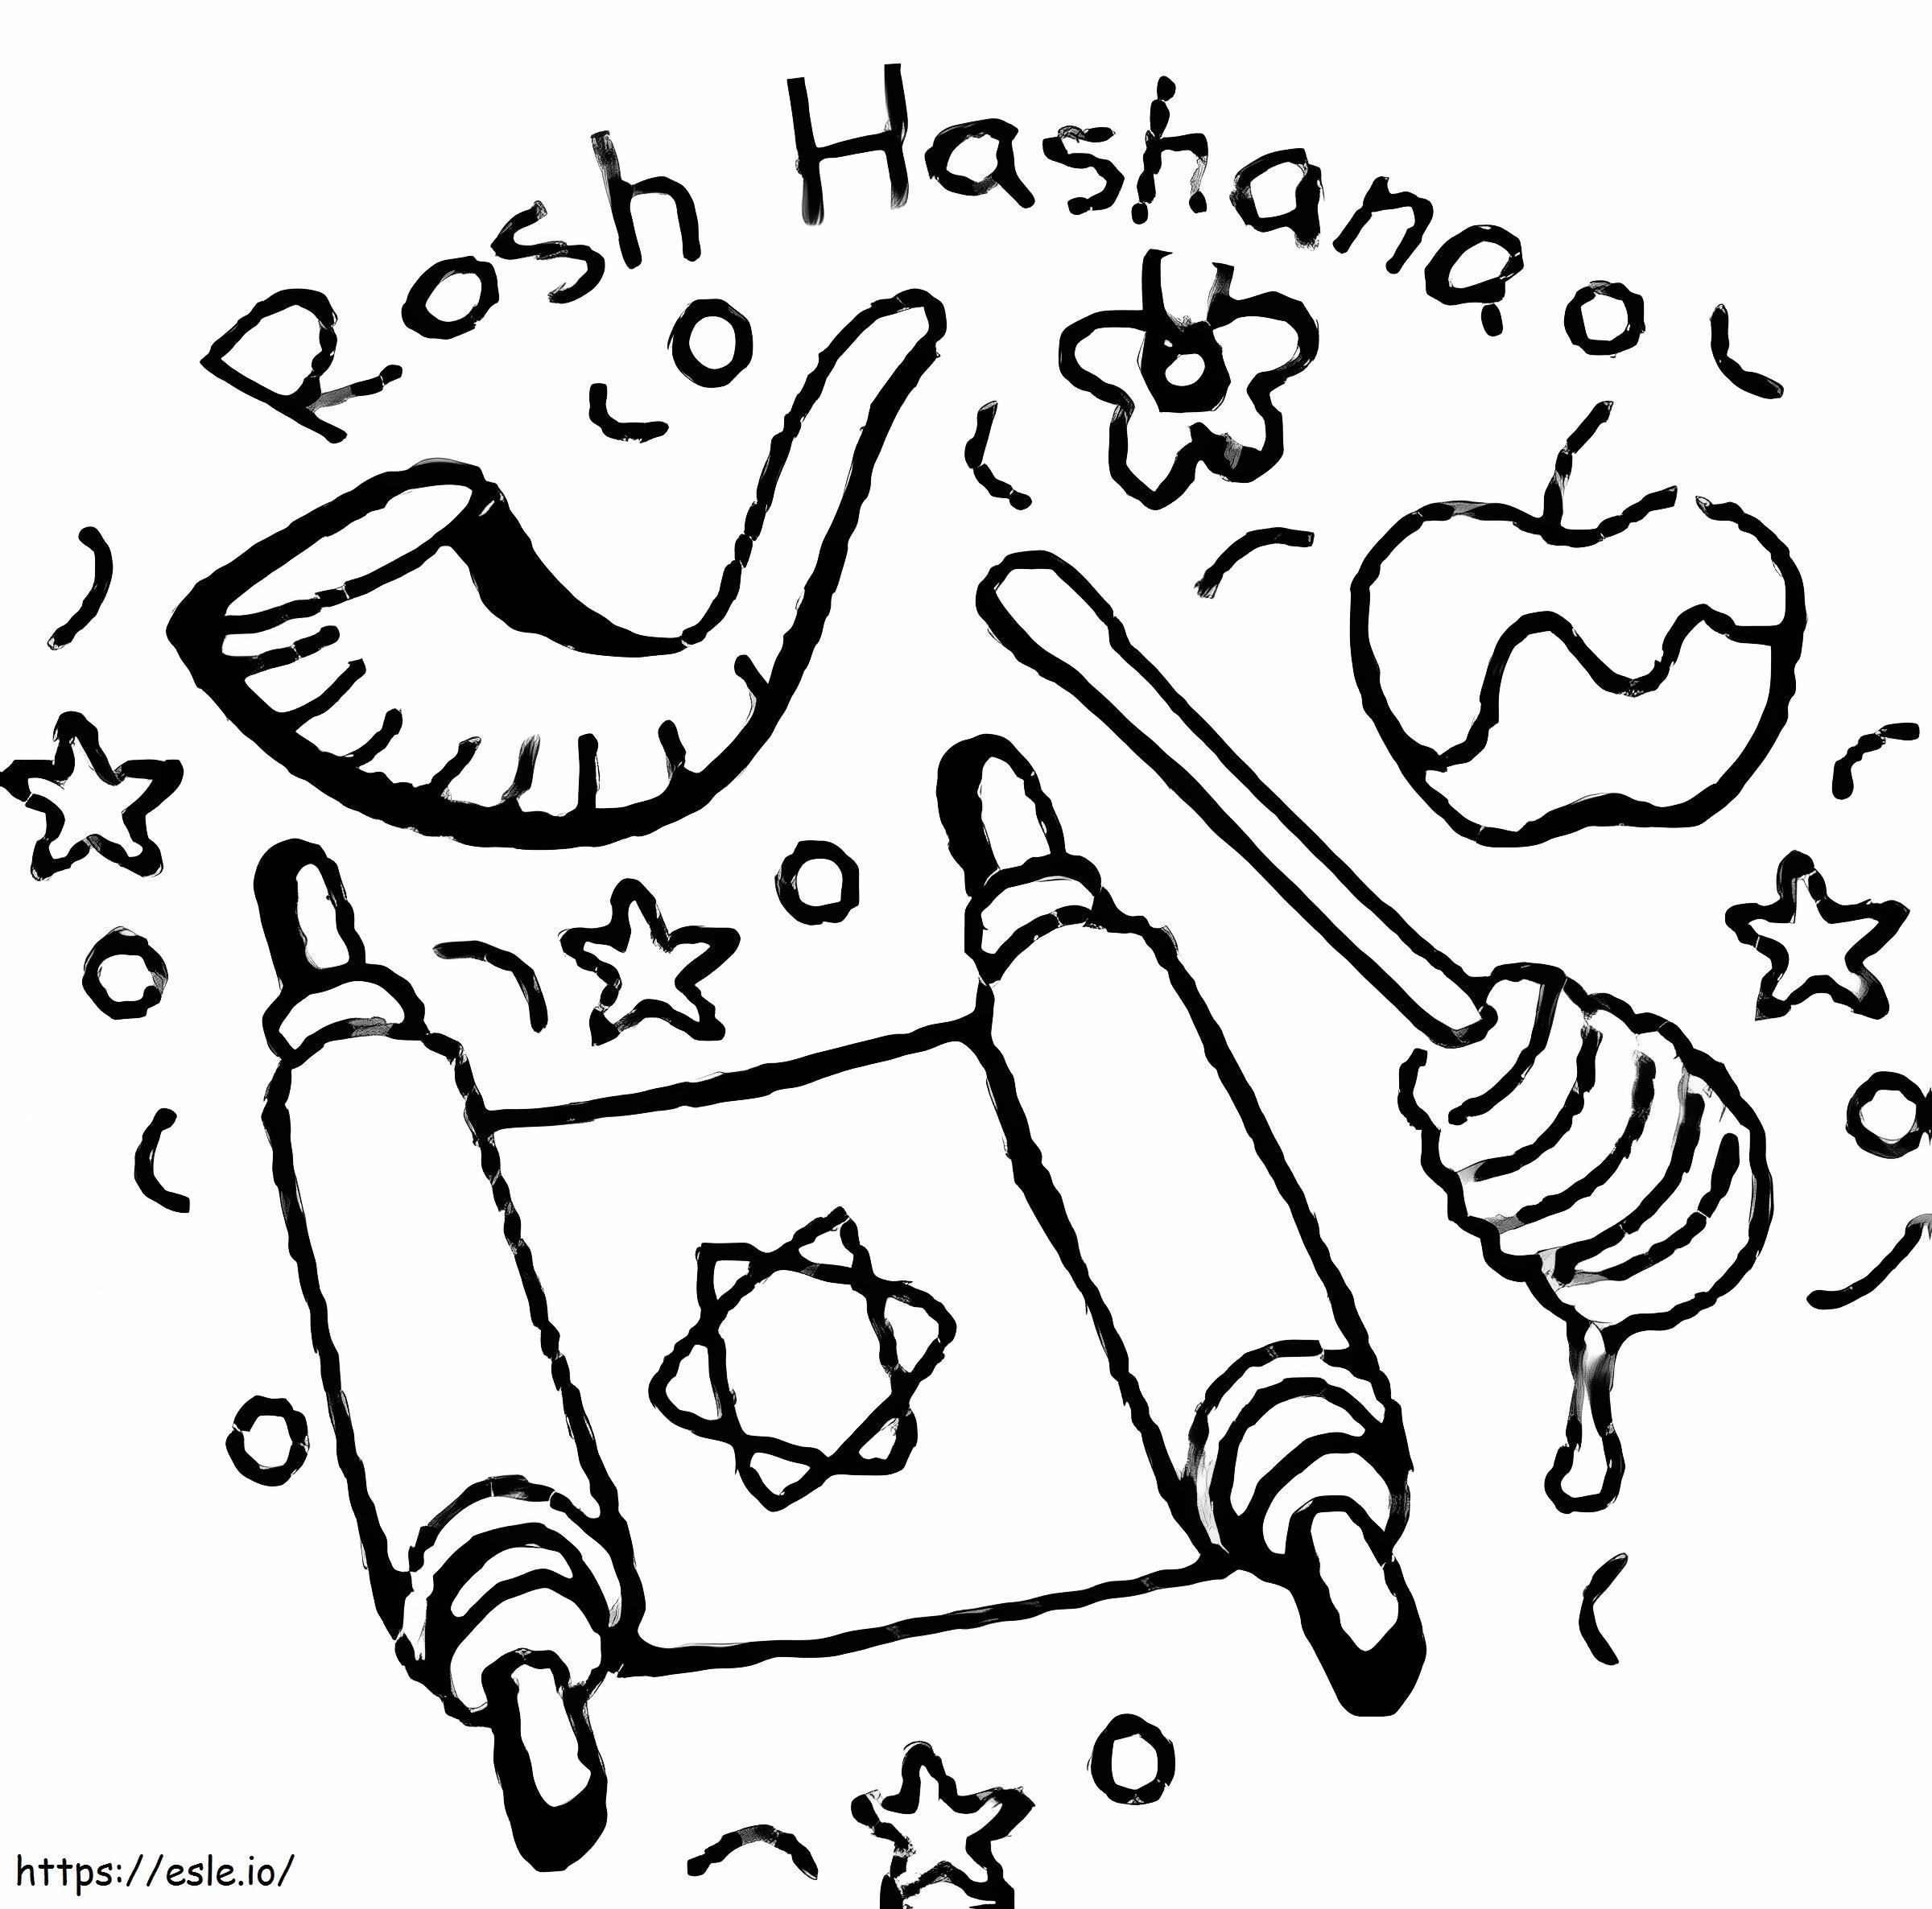 Ros Hashanah zsidó ünnep kifestő